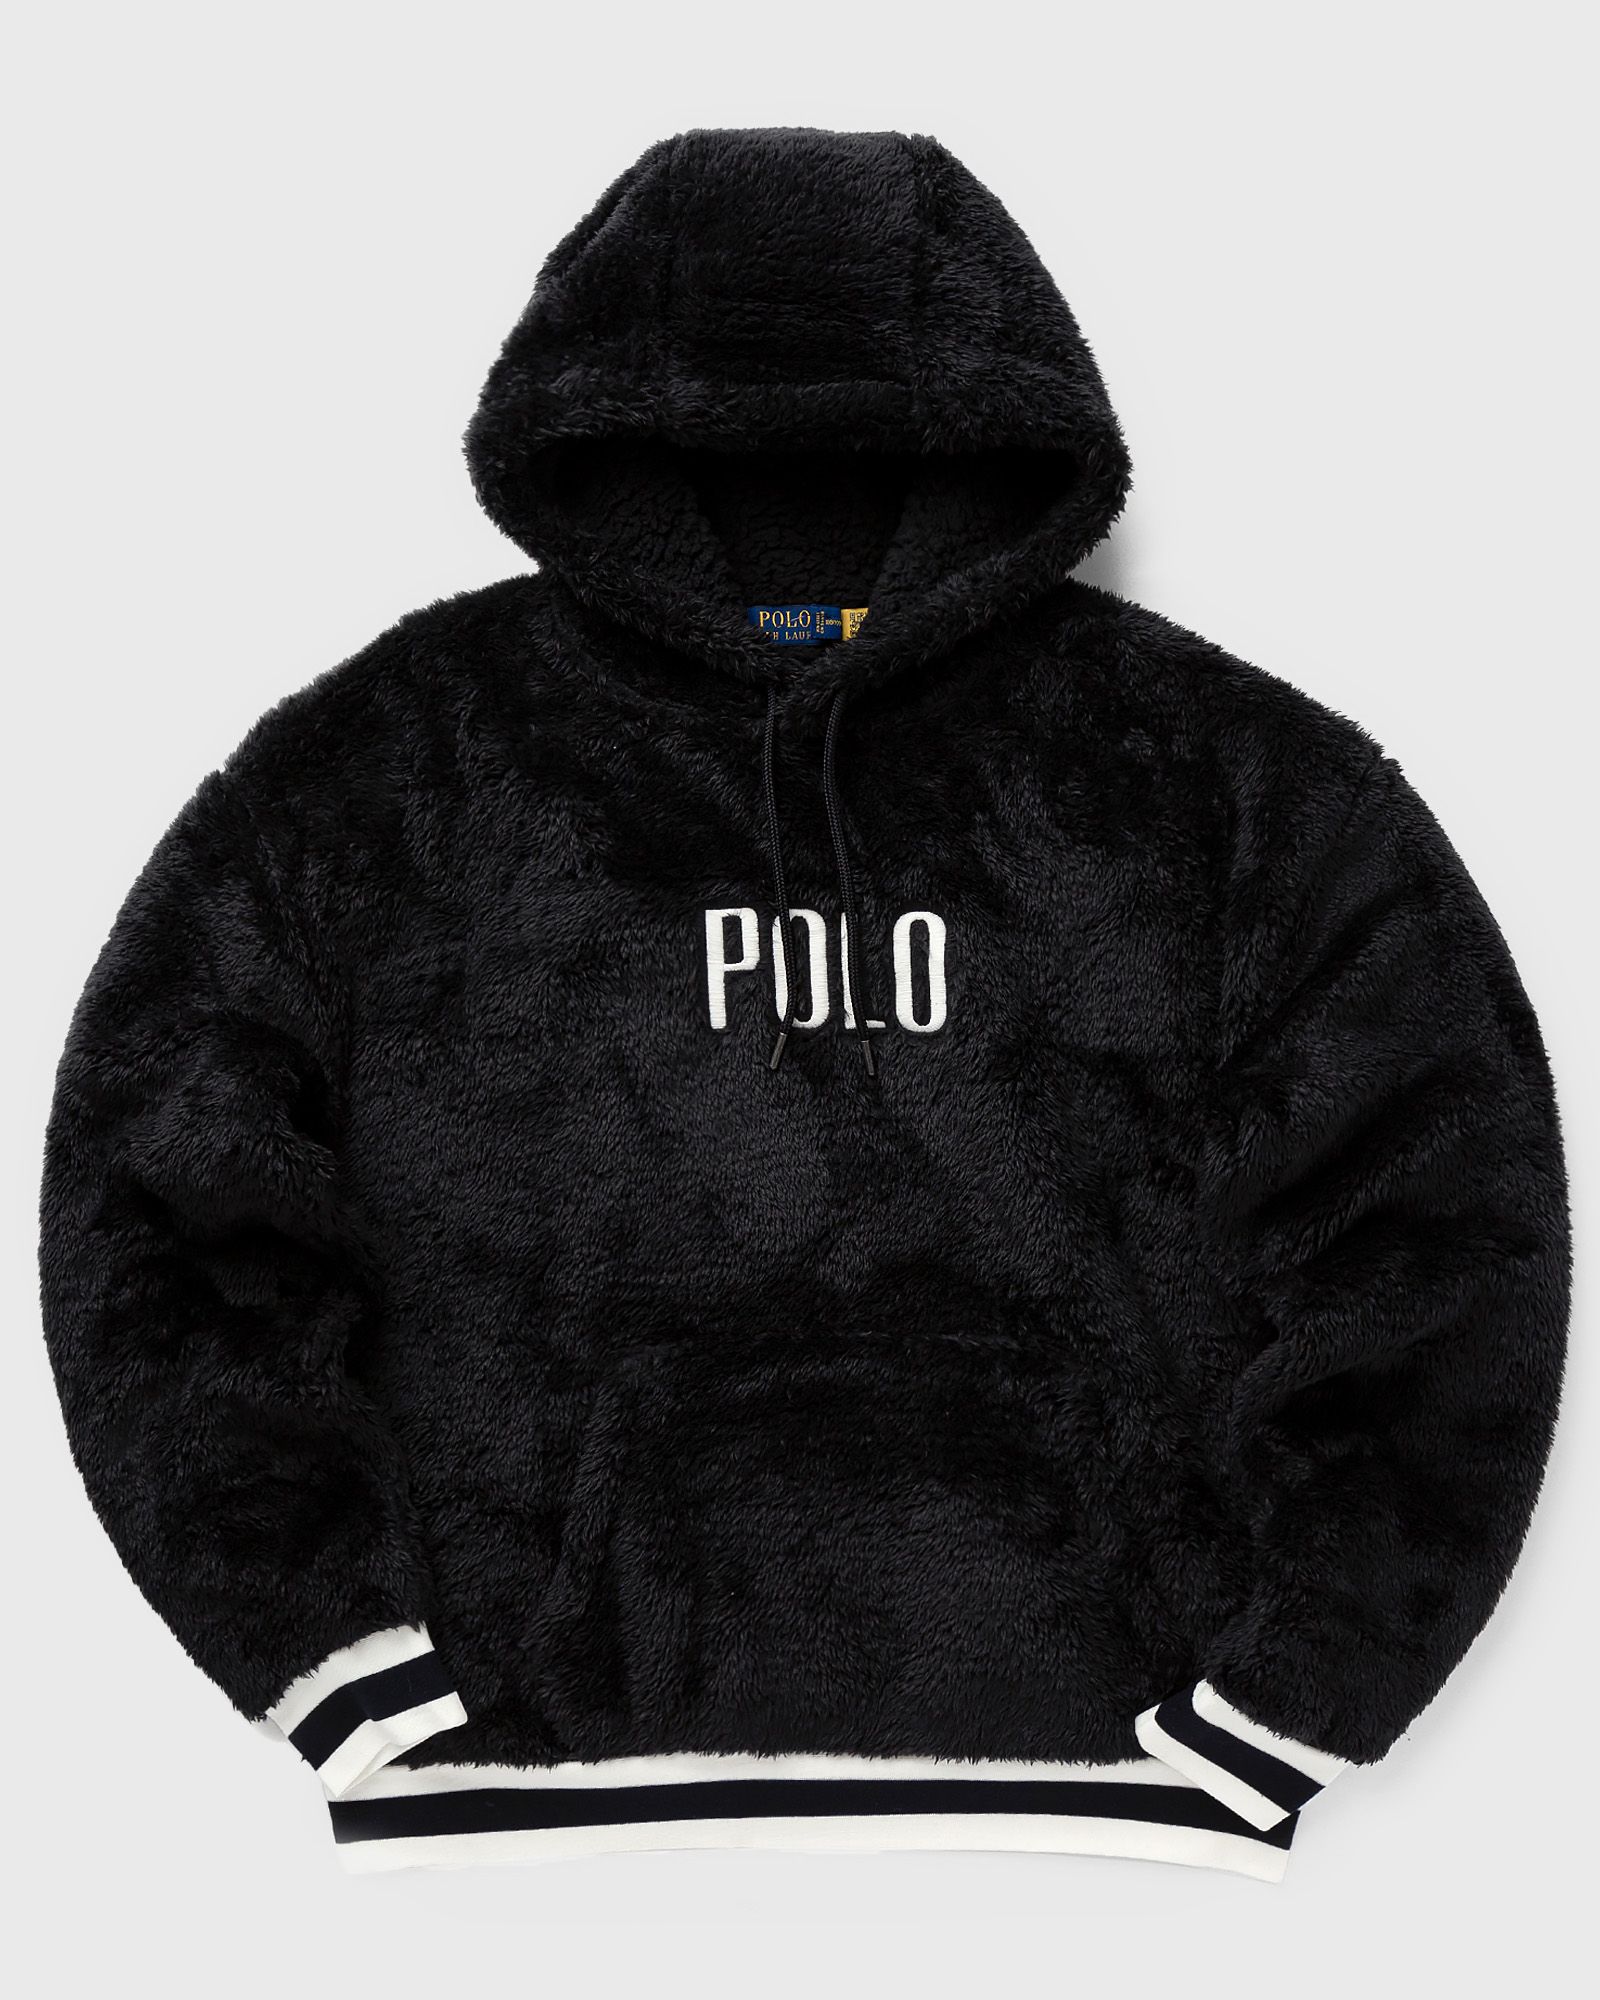 Polo Ralph Lauren - pohoodm1-long sleeve-sweatshirt men hoodies black in größe:xxl